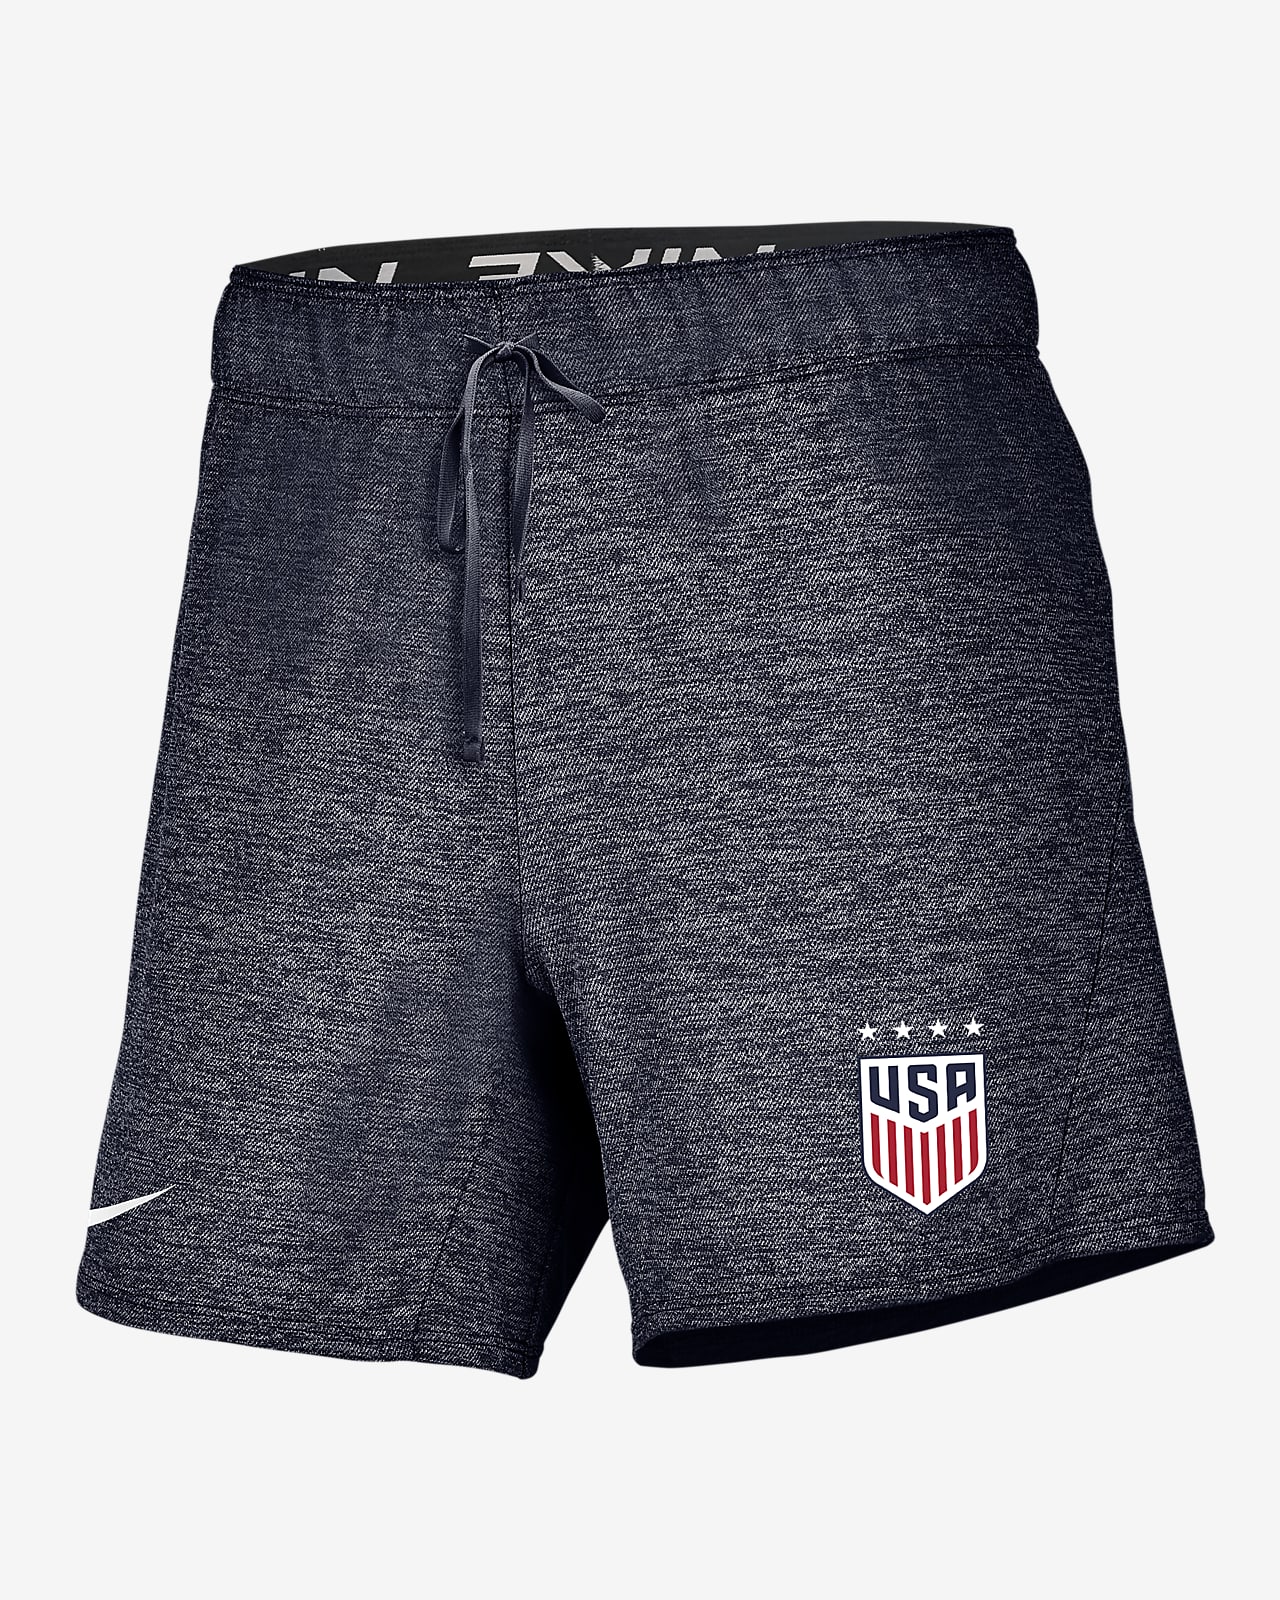 USWNT Women's Nike Soccer Shorts